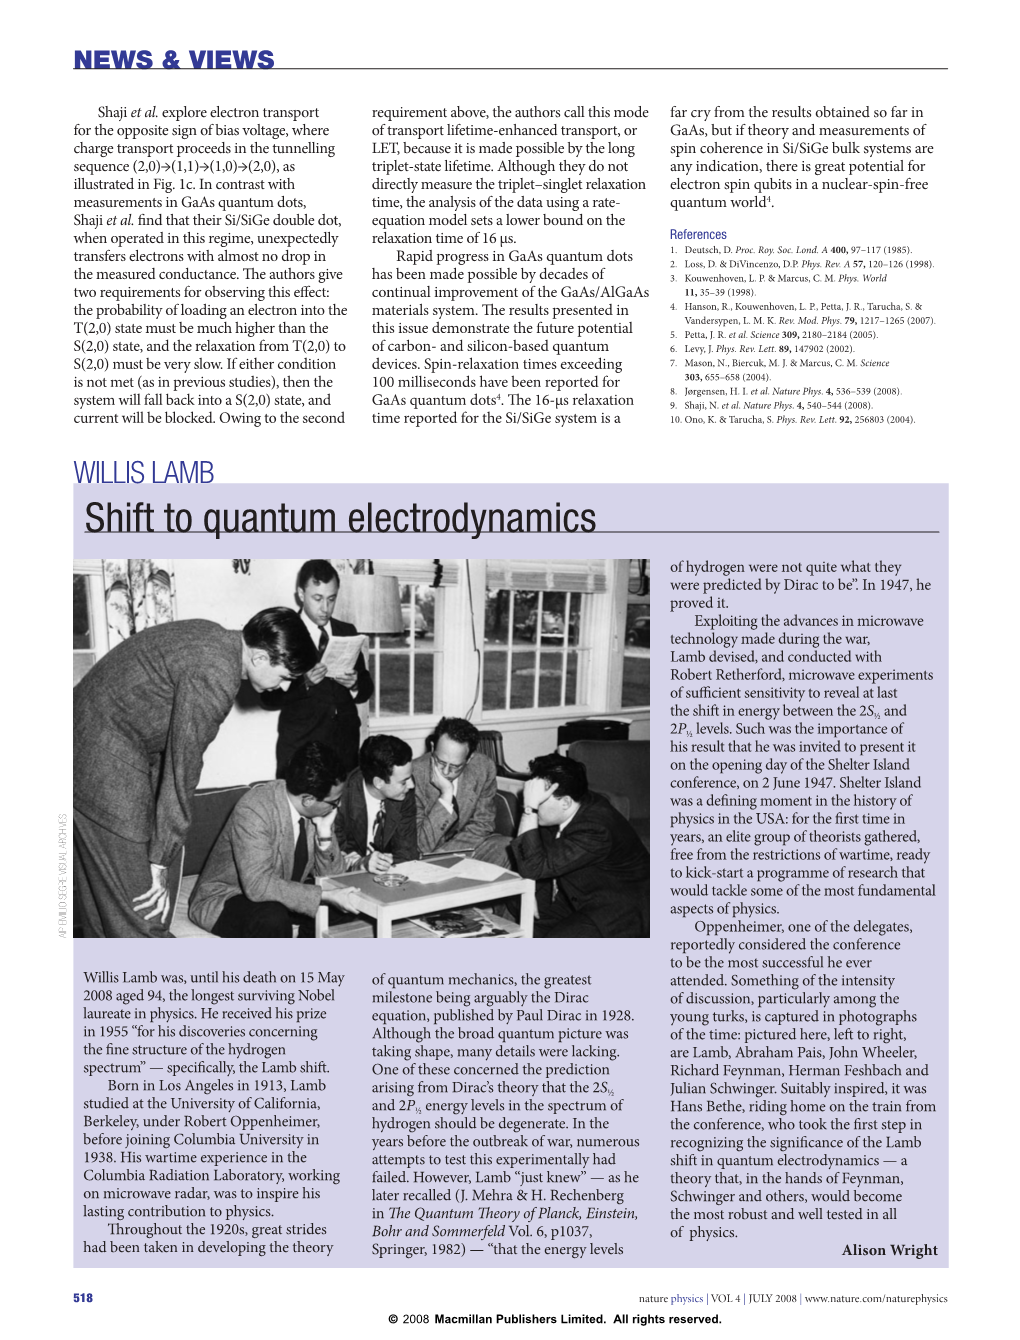 Shift to Quantum Electrodynamics